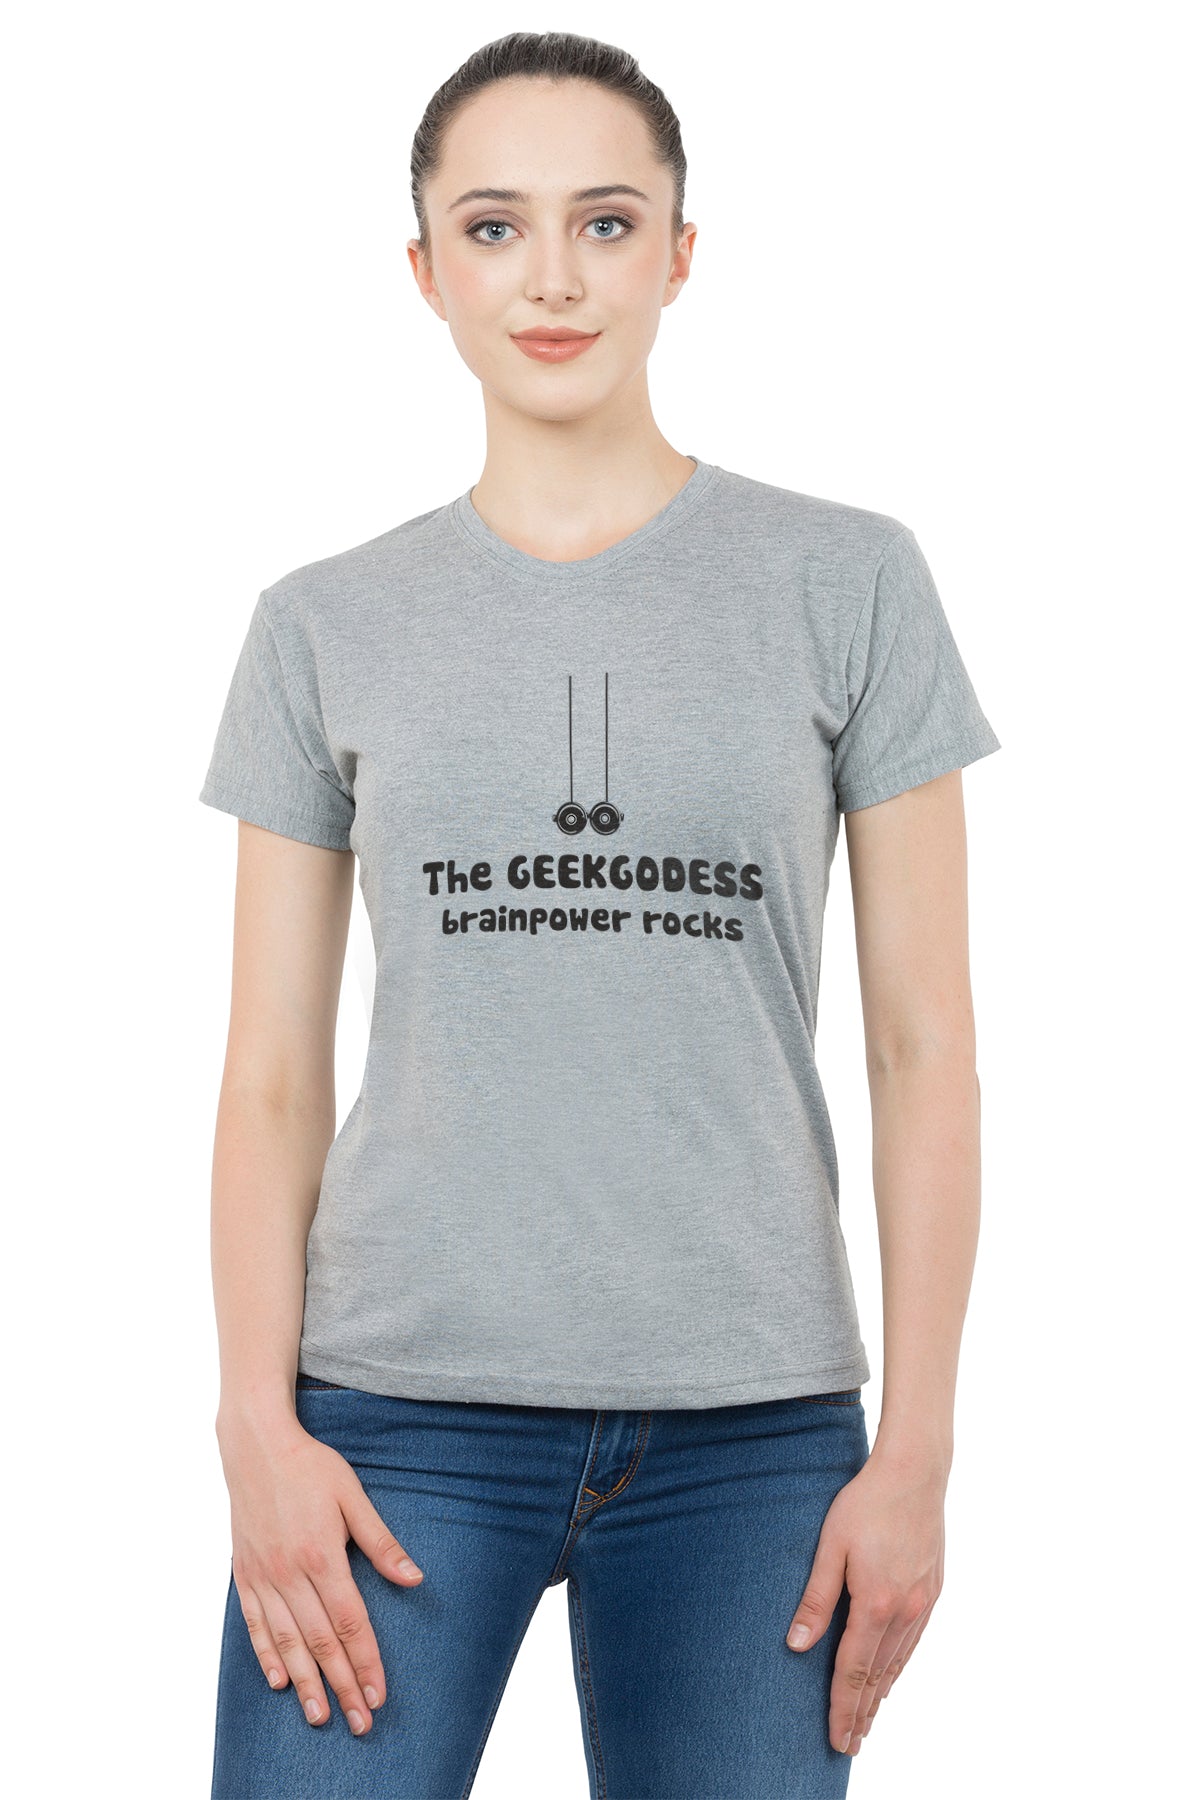 Geek God matching Couple T shirts- Grey